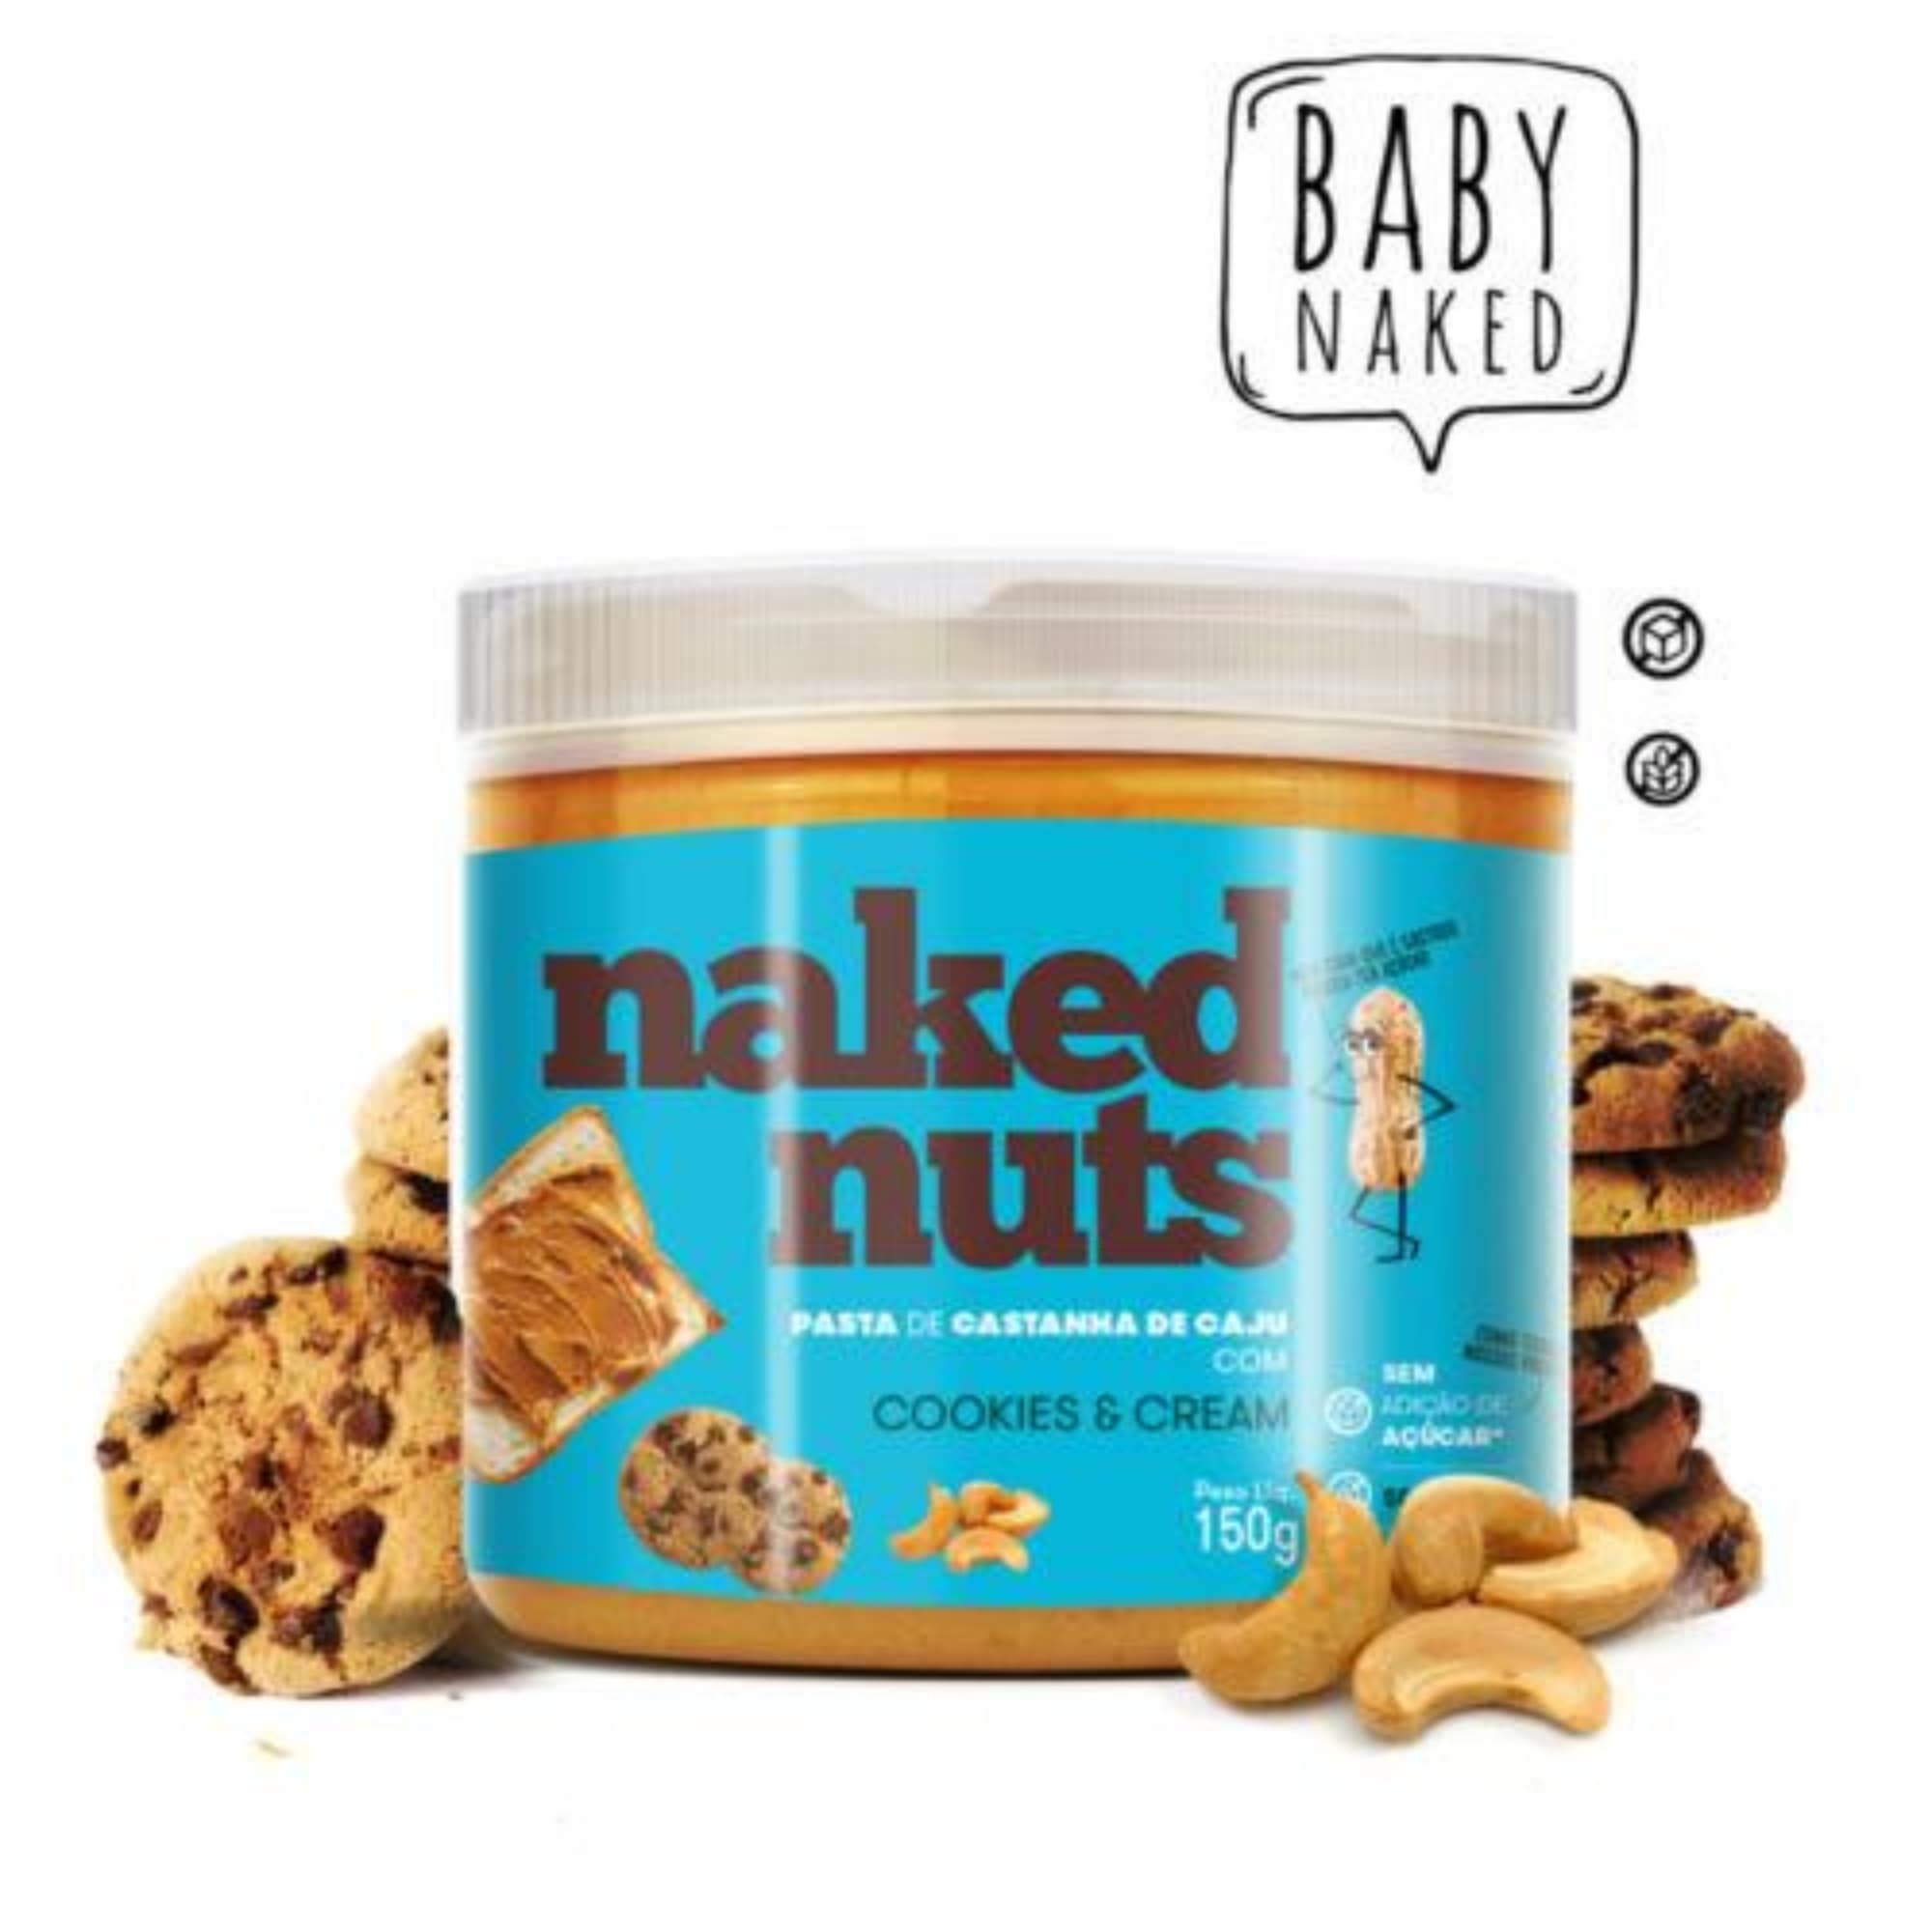 Kit C/ 5 Unidades De Pastas Naked Nuts